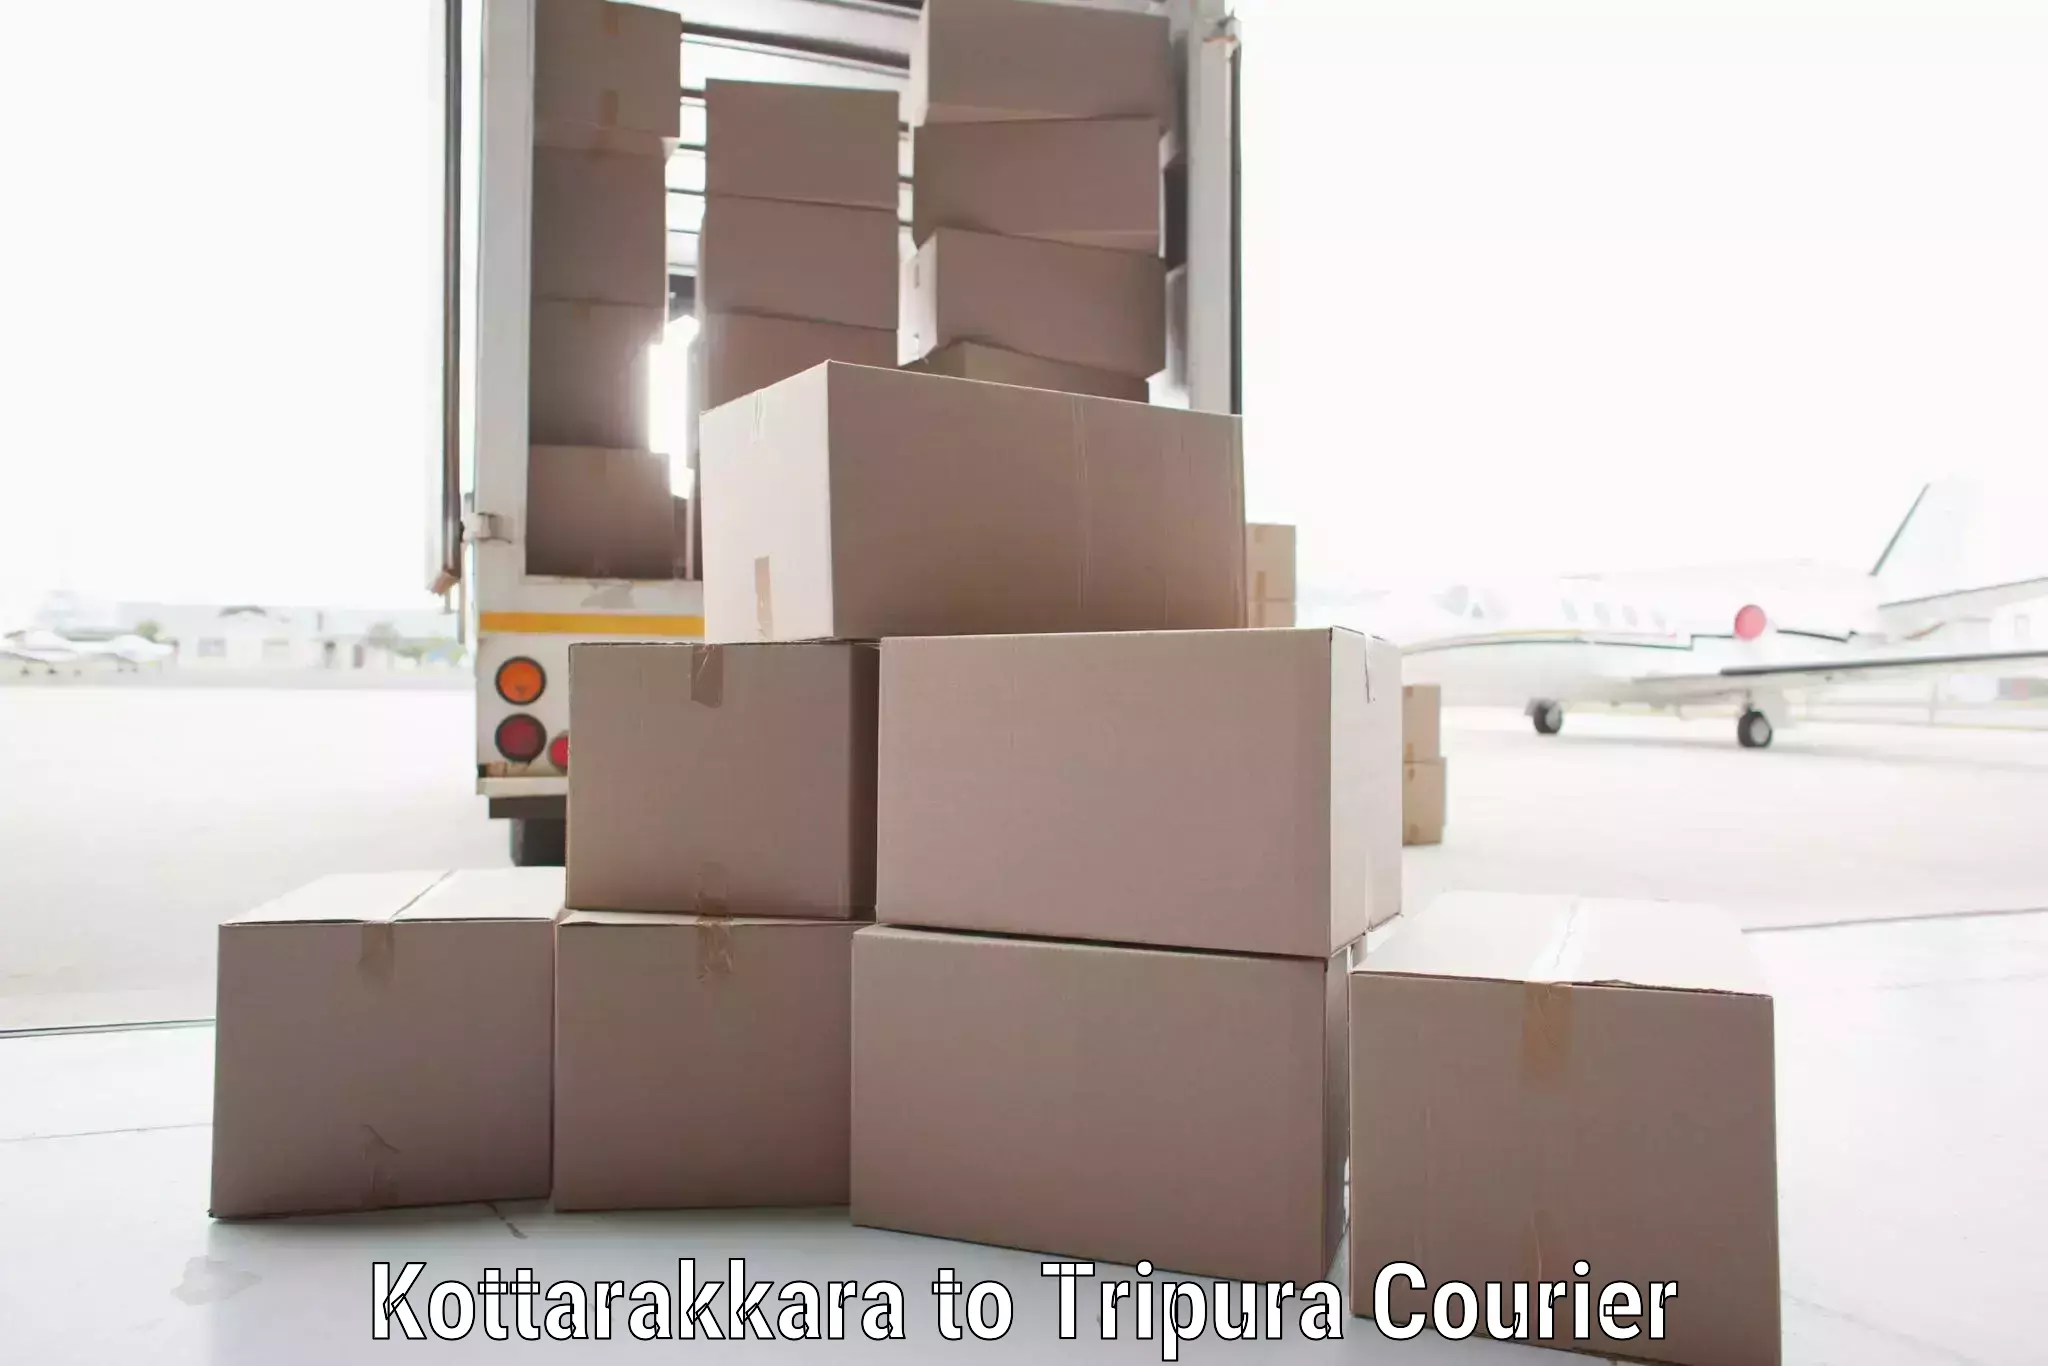 User-friendly courier app Kottarakkara to Udaipur Tripura